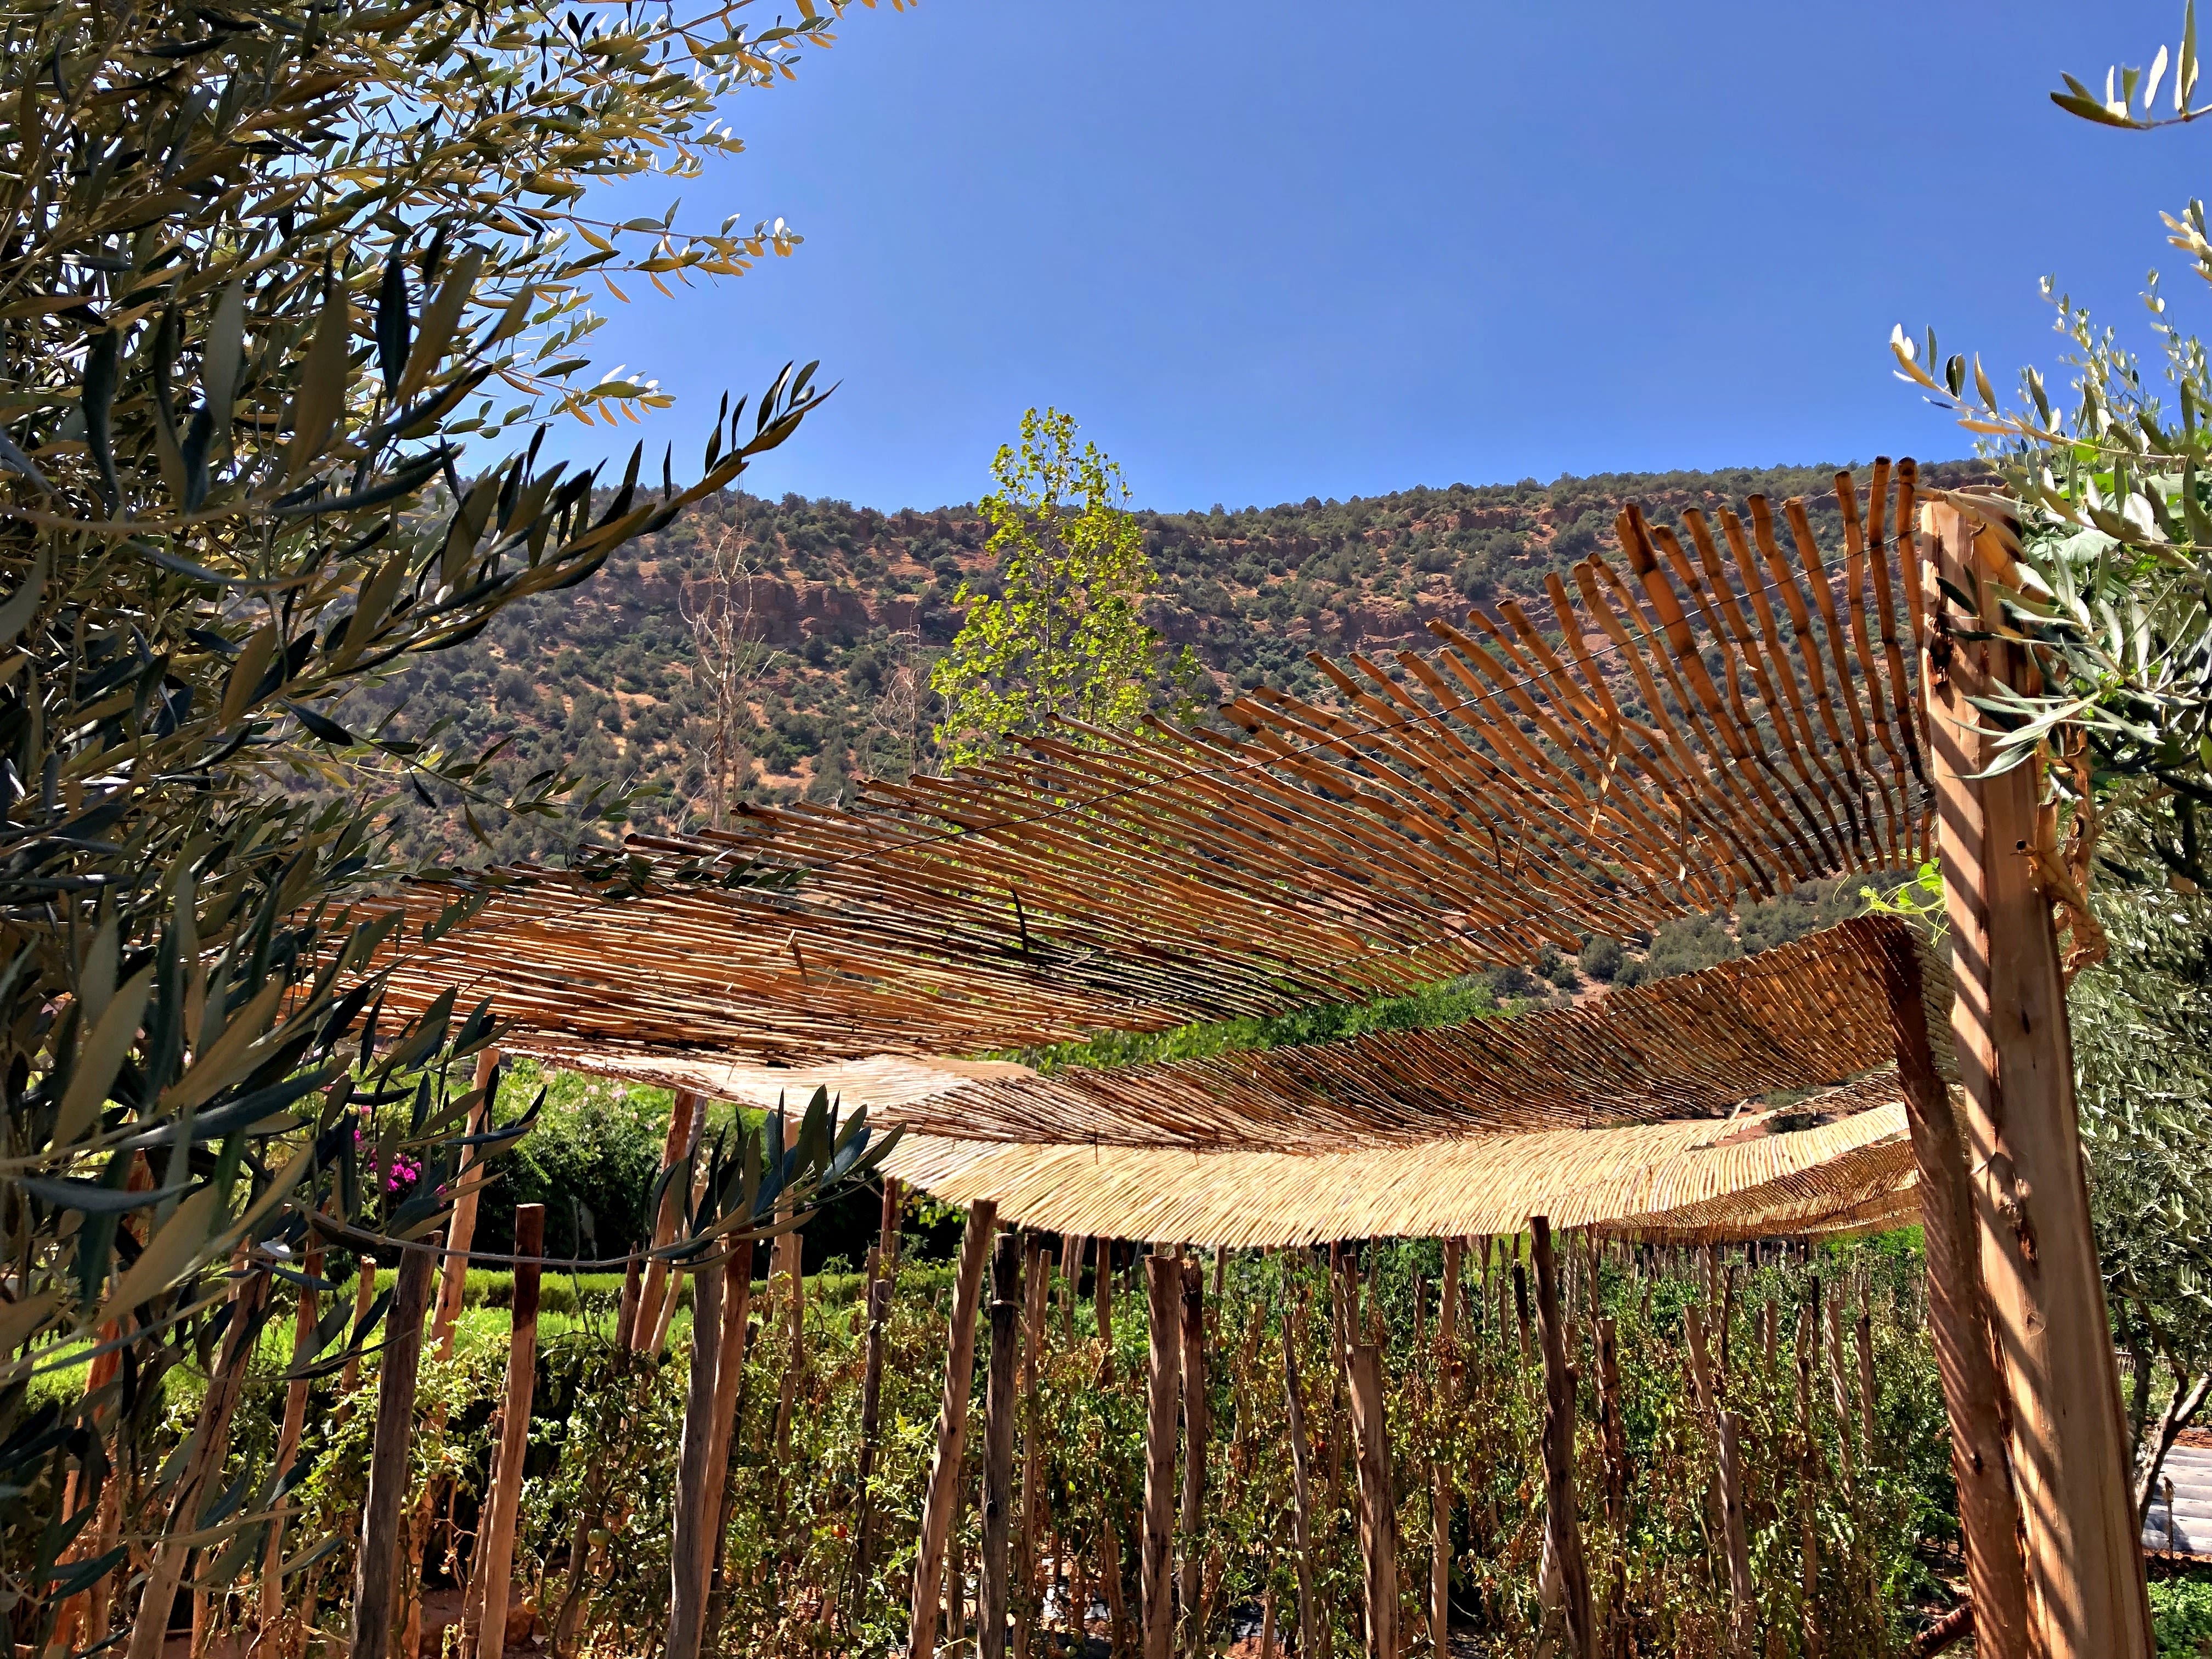 The vegetabkle garden at Kasbah Tamadot in Morocco